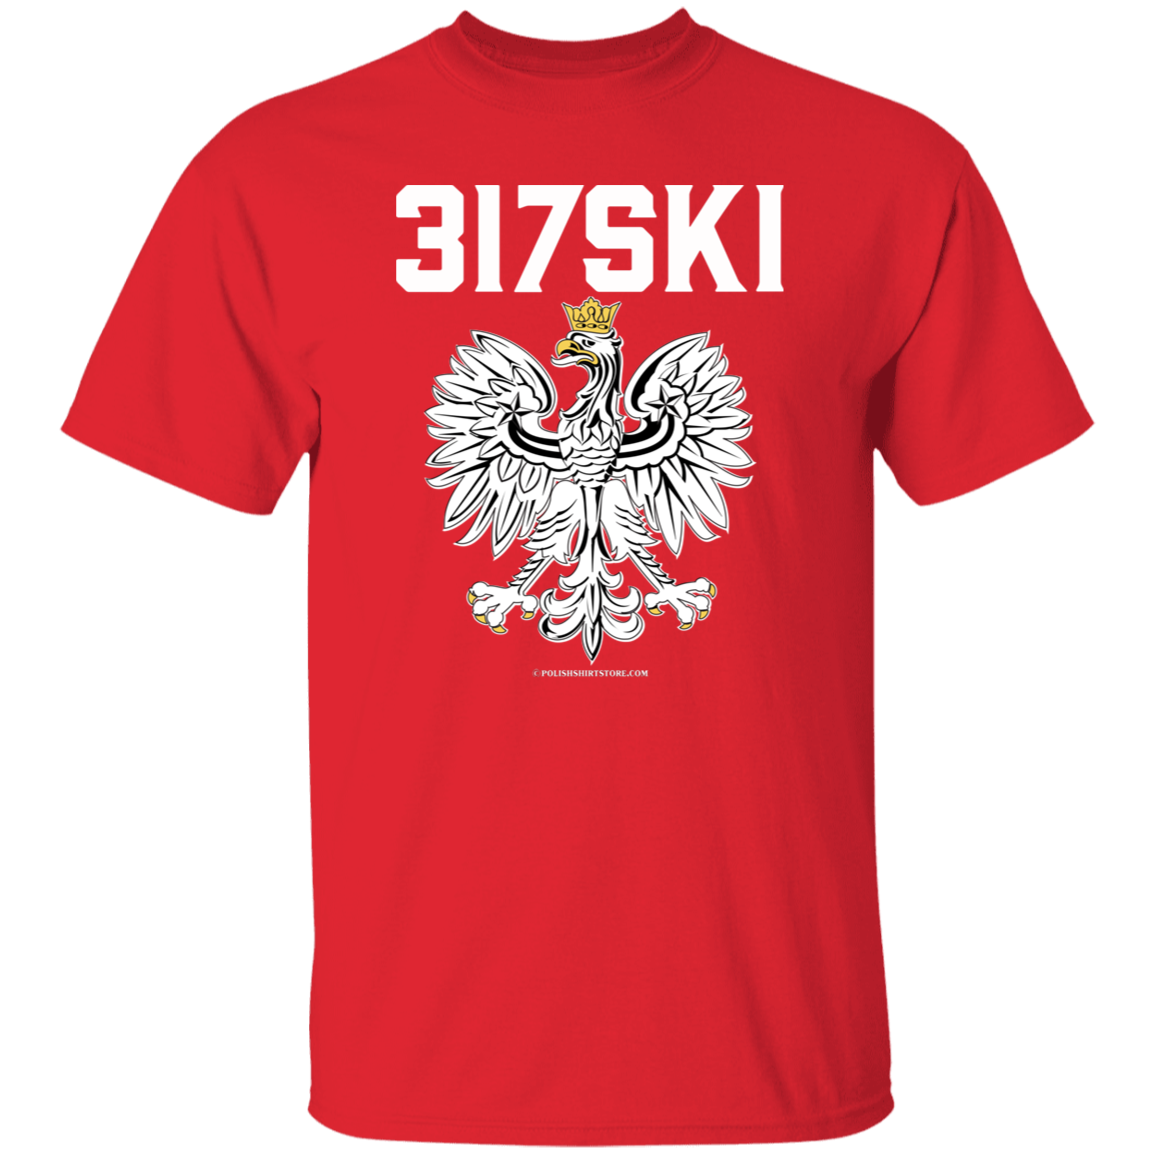 317SKI Apparel CustomCat G500 5.3 oz. T-Shirt Red S